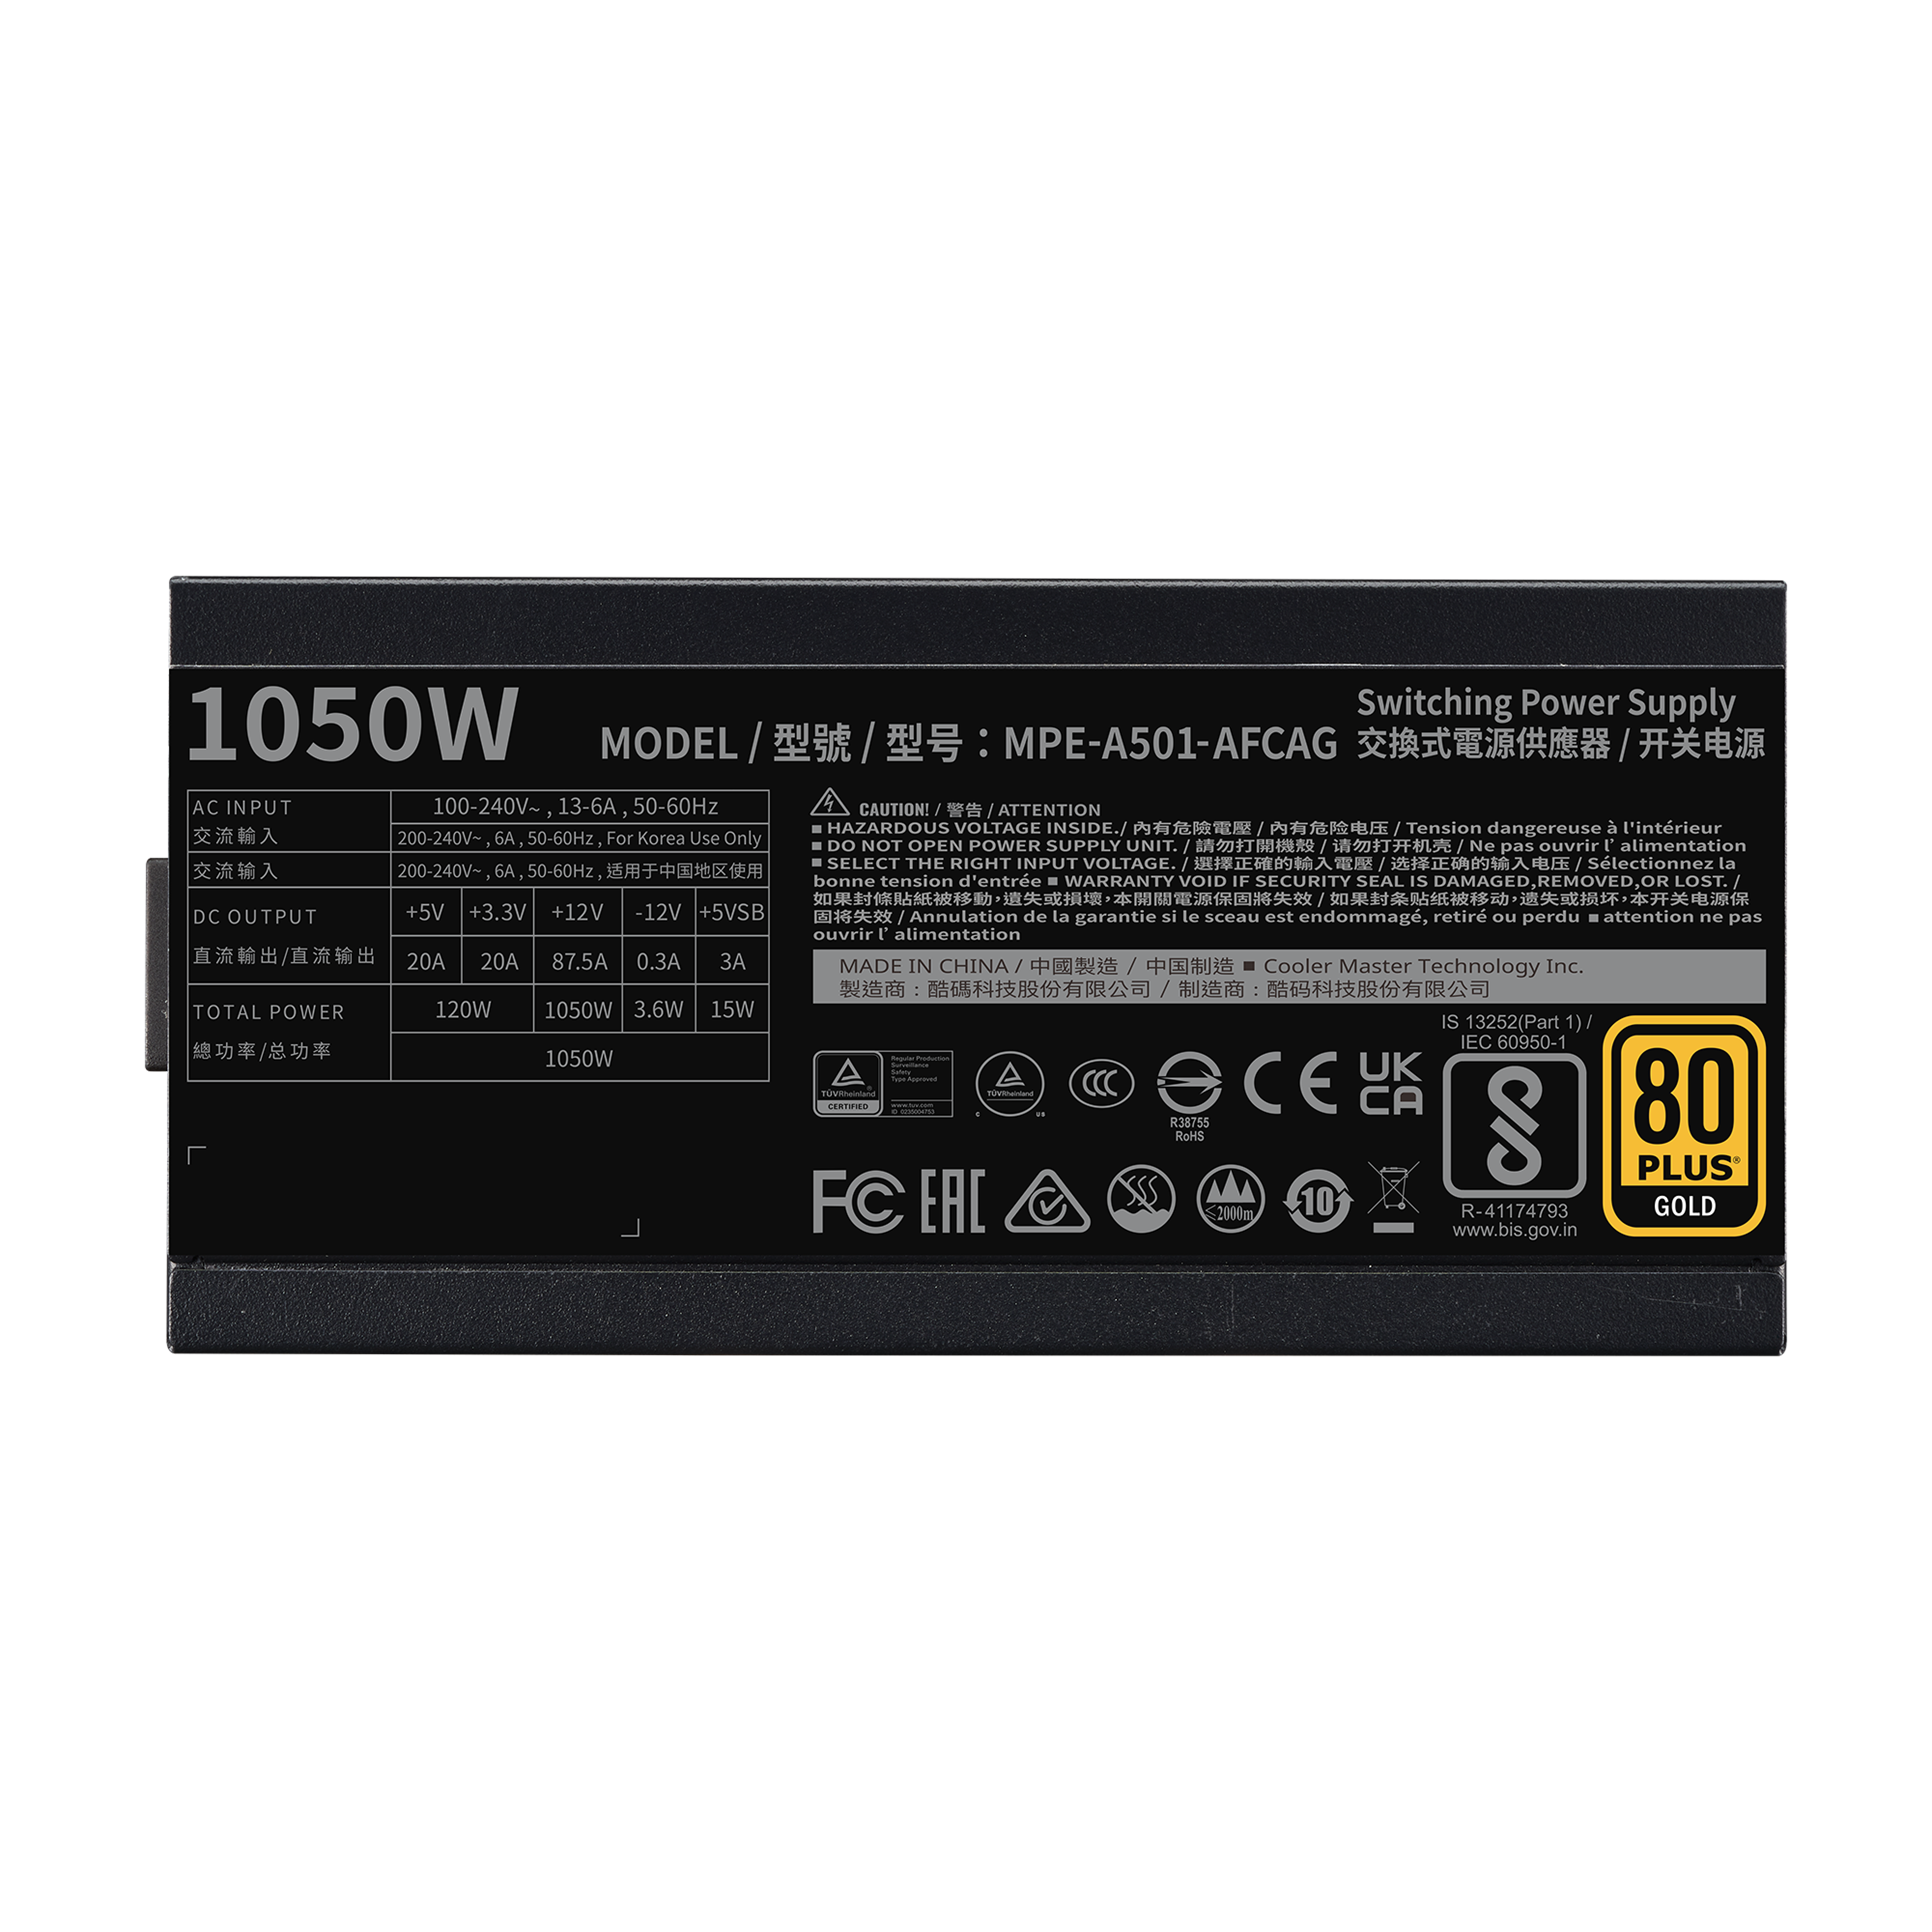 Coolermaster Cooler Master MWE Gold V2 1050W PCIe 5.0 Fully